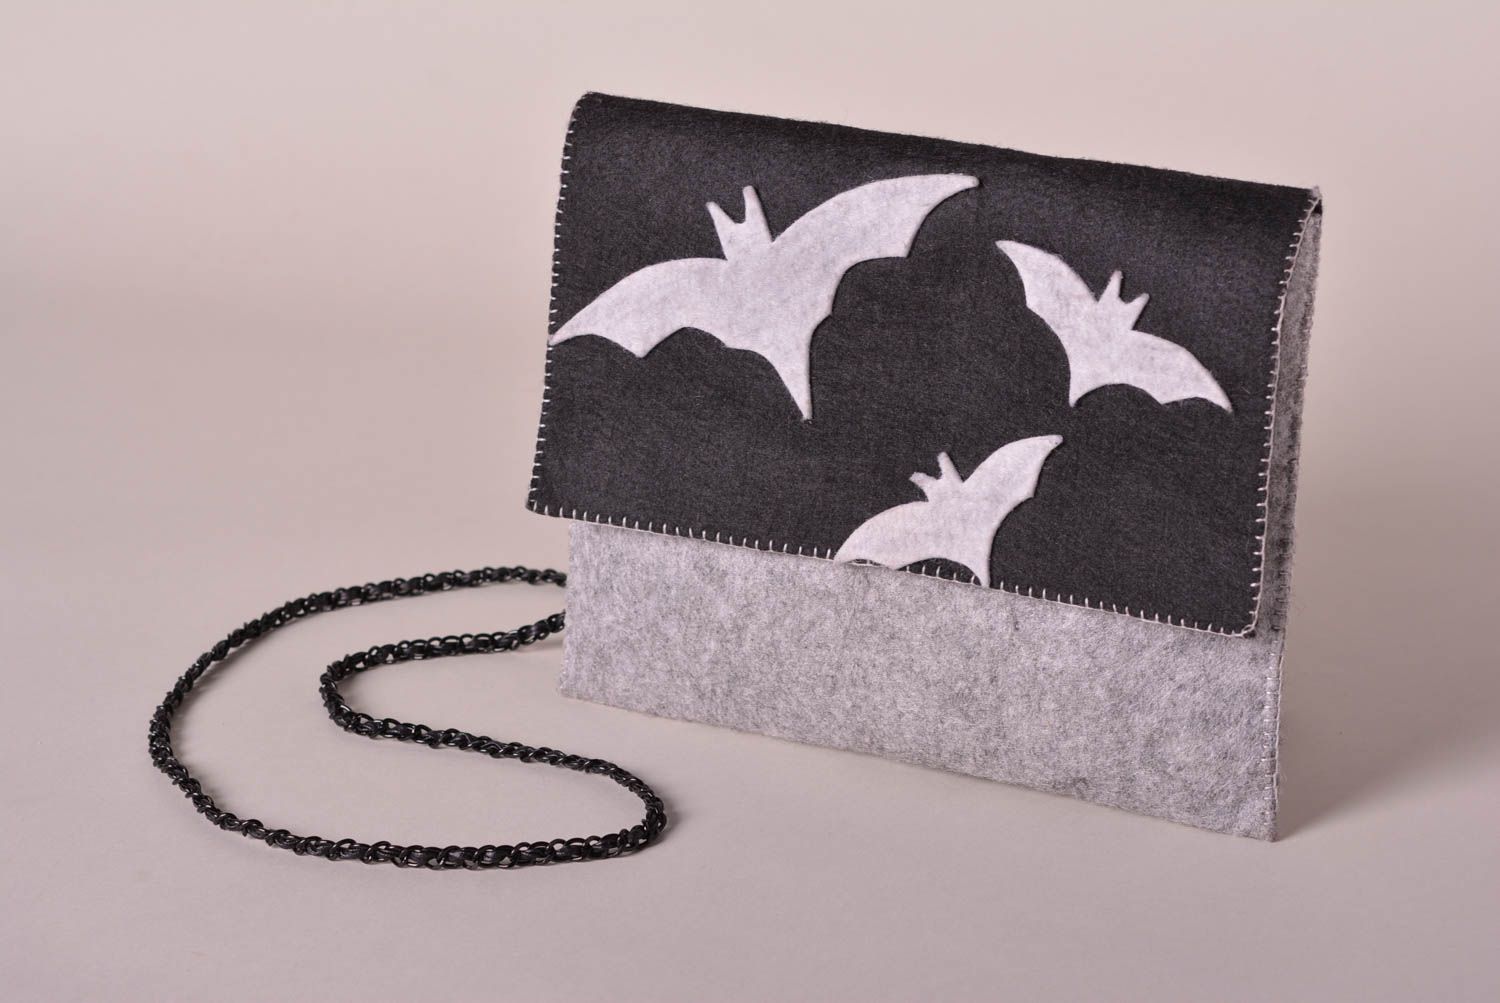 Unusual handmade purse designs beautiful felt wallet accessories for girls photo 1